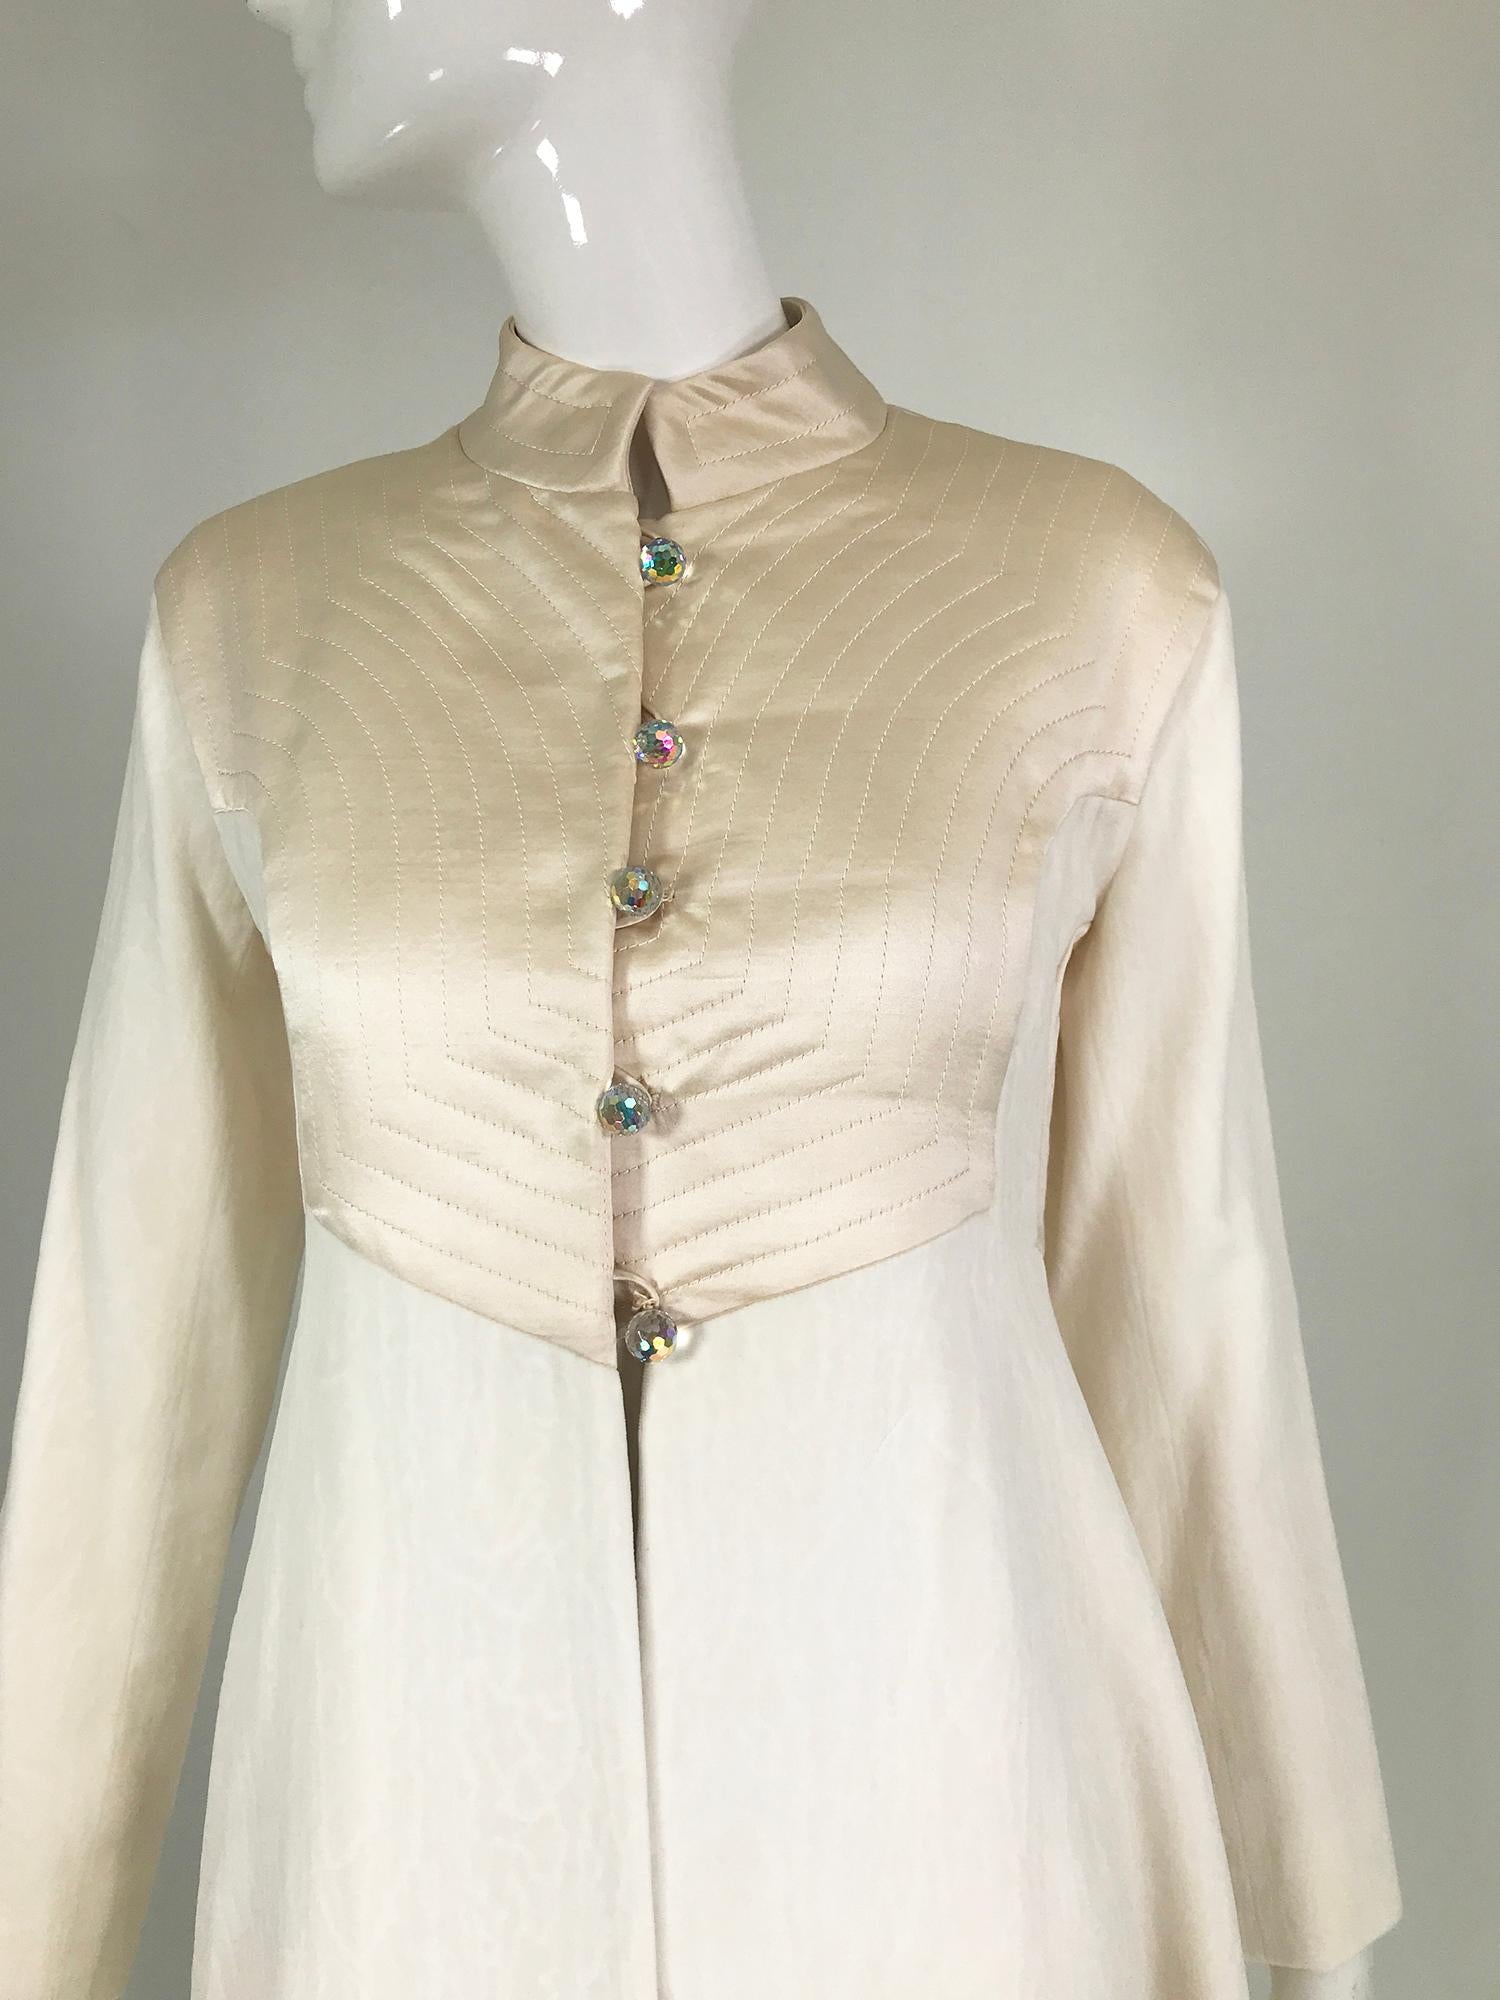 Ronald Amey Rare Evening Coat & Evening Dress in Devore Velvet & Satin 1970s For Sale 10